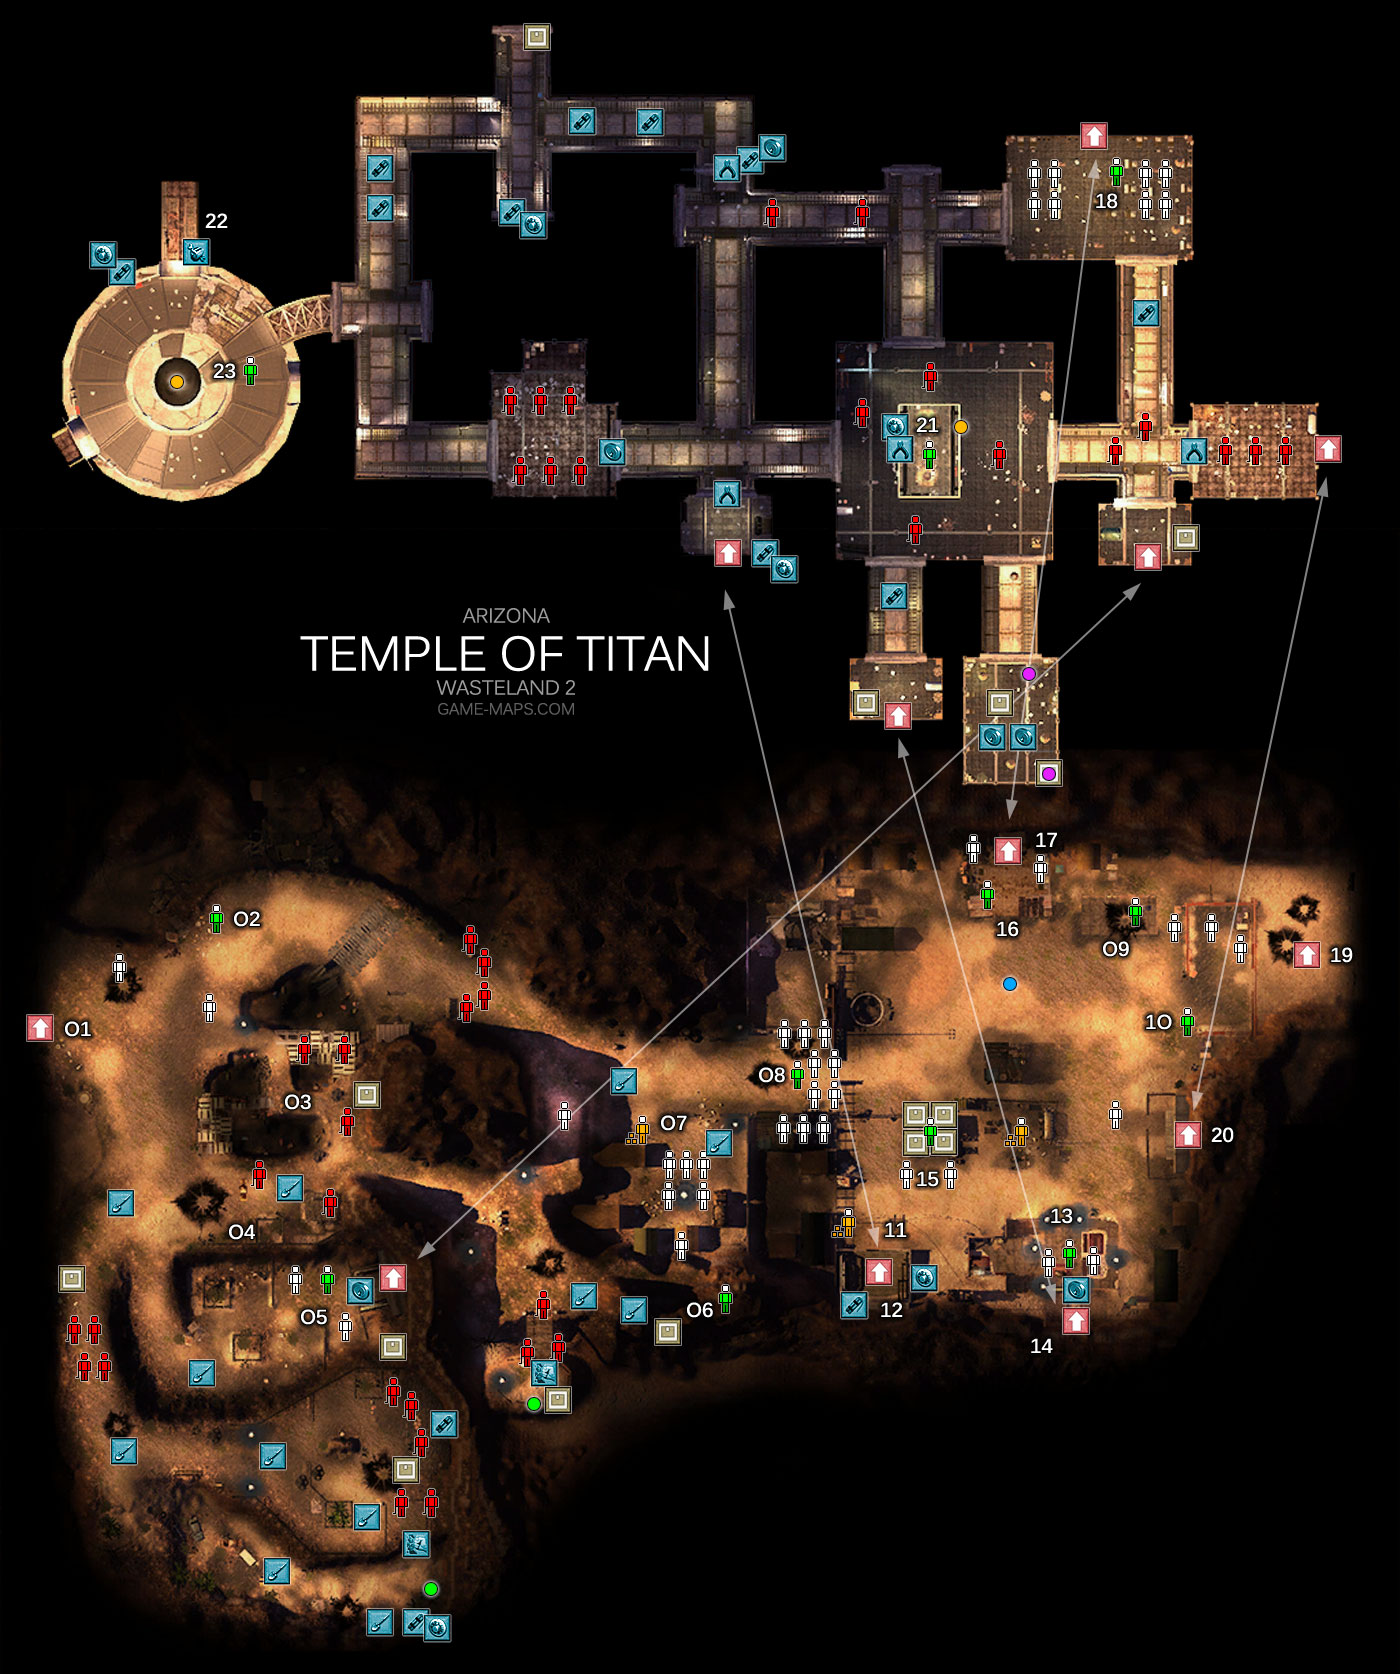 Temple of Titan - Arizona - Wasteland 2